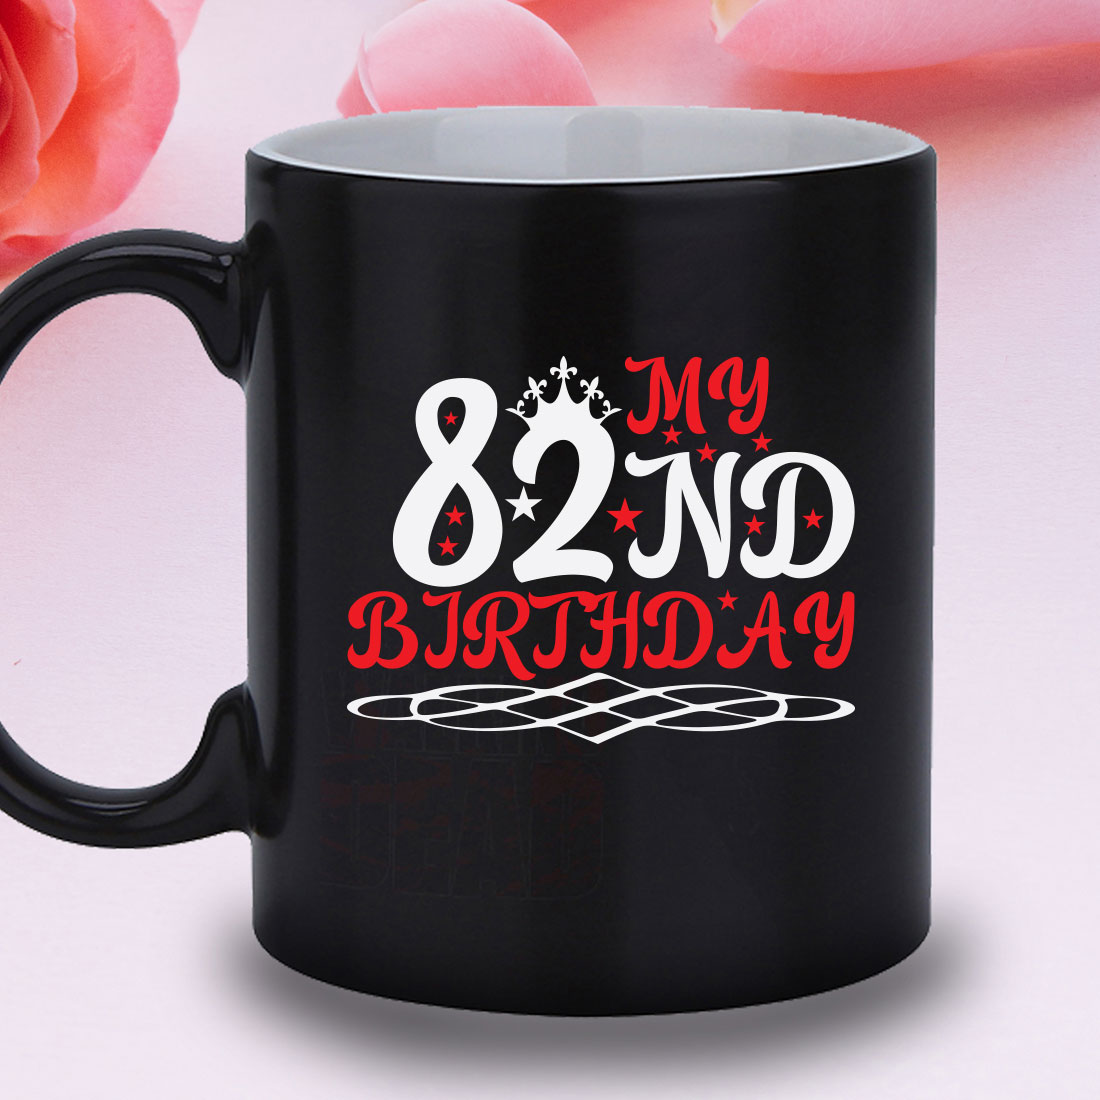 Black coffee mug with the words my 2nd birthday printed on it.